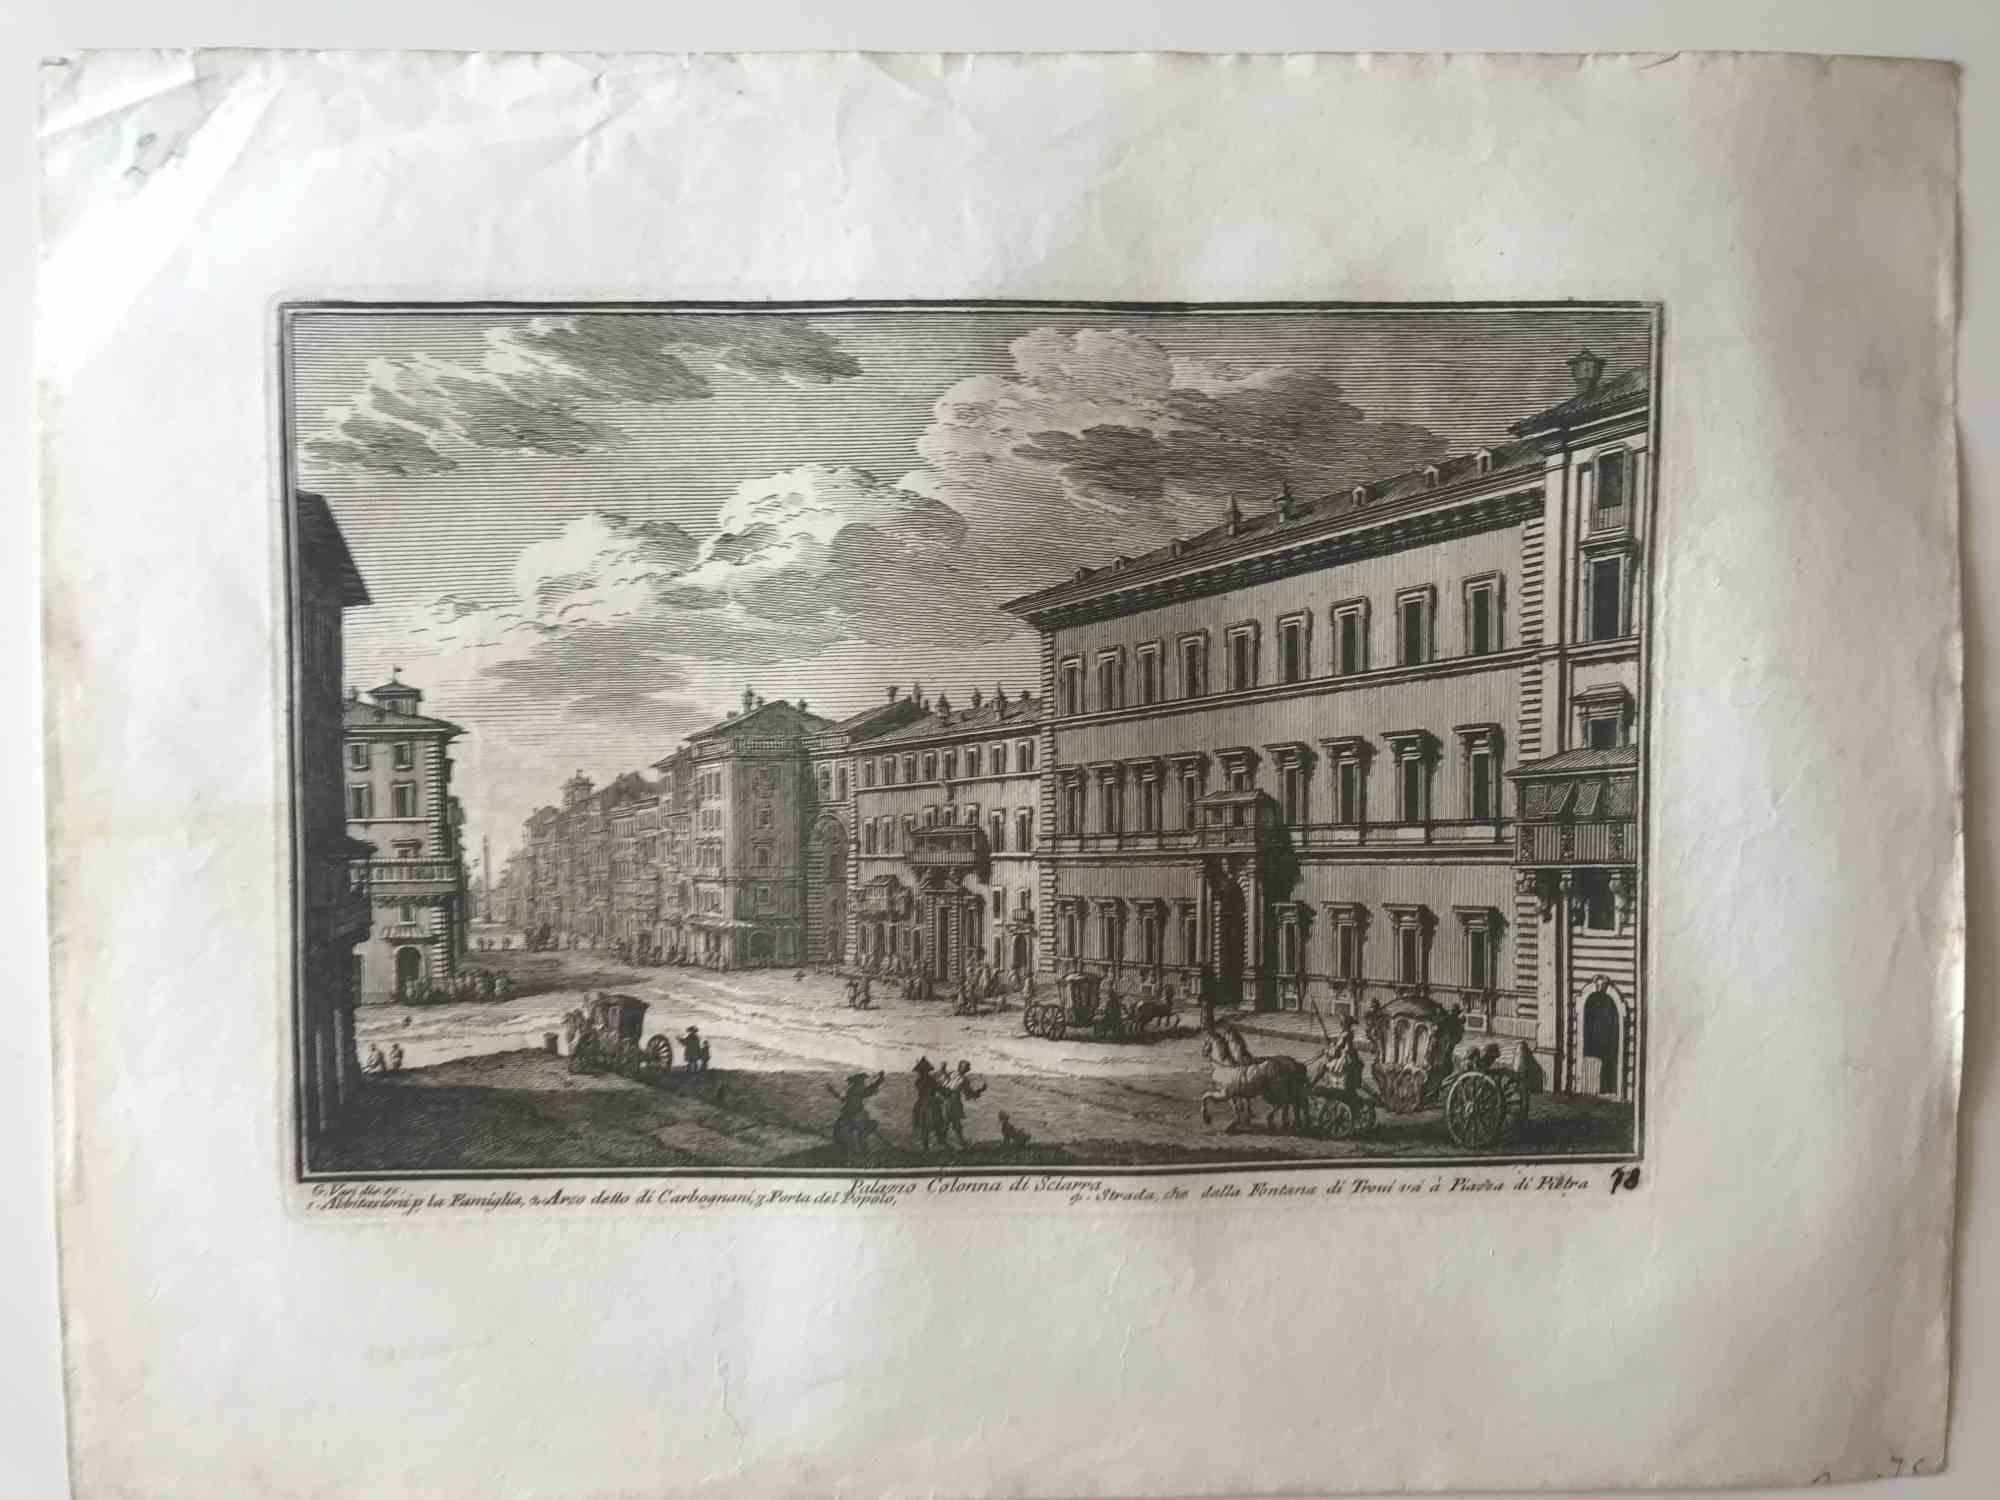 Figurative Print Giuseppe Vasi - Gravure du Palazzo Colonna di Sciarra par G. Vasi, fin du XVIIIe siècle